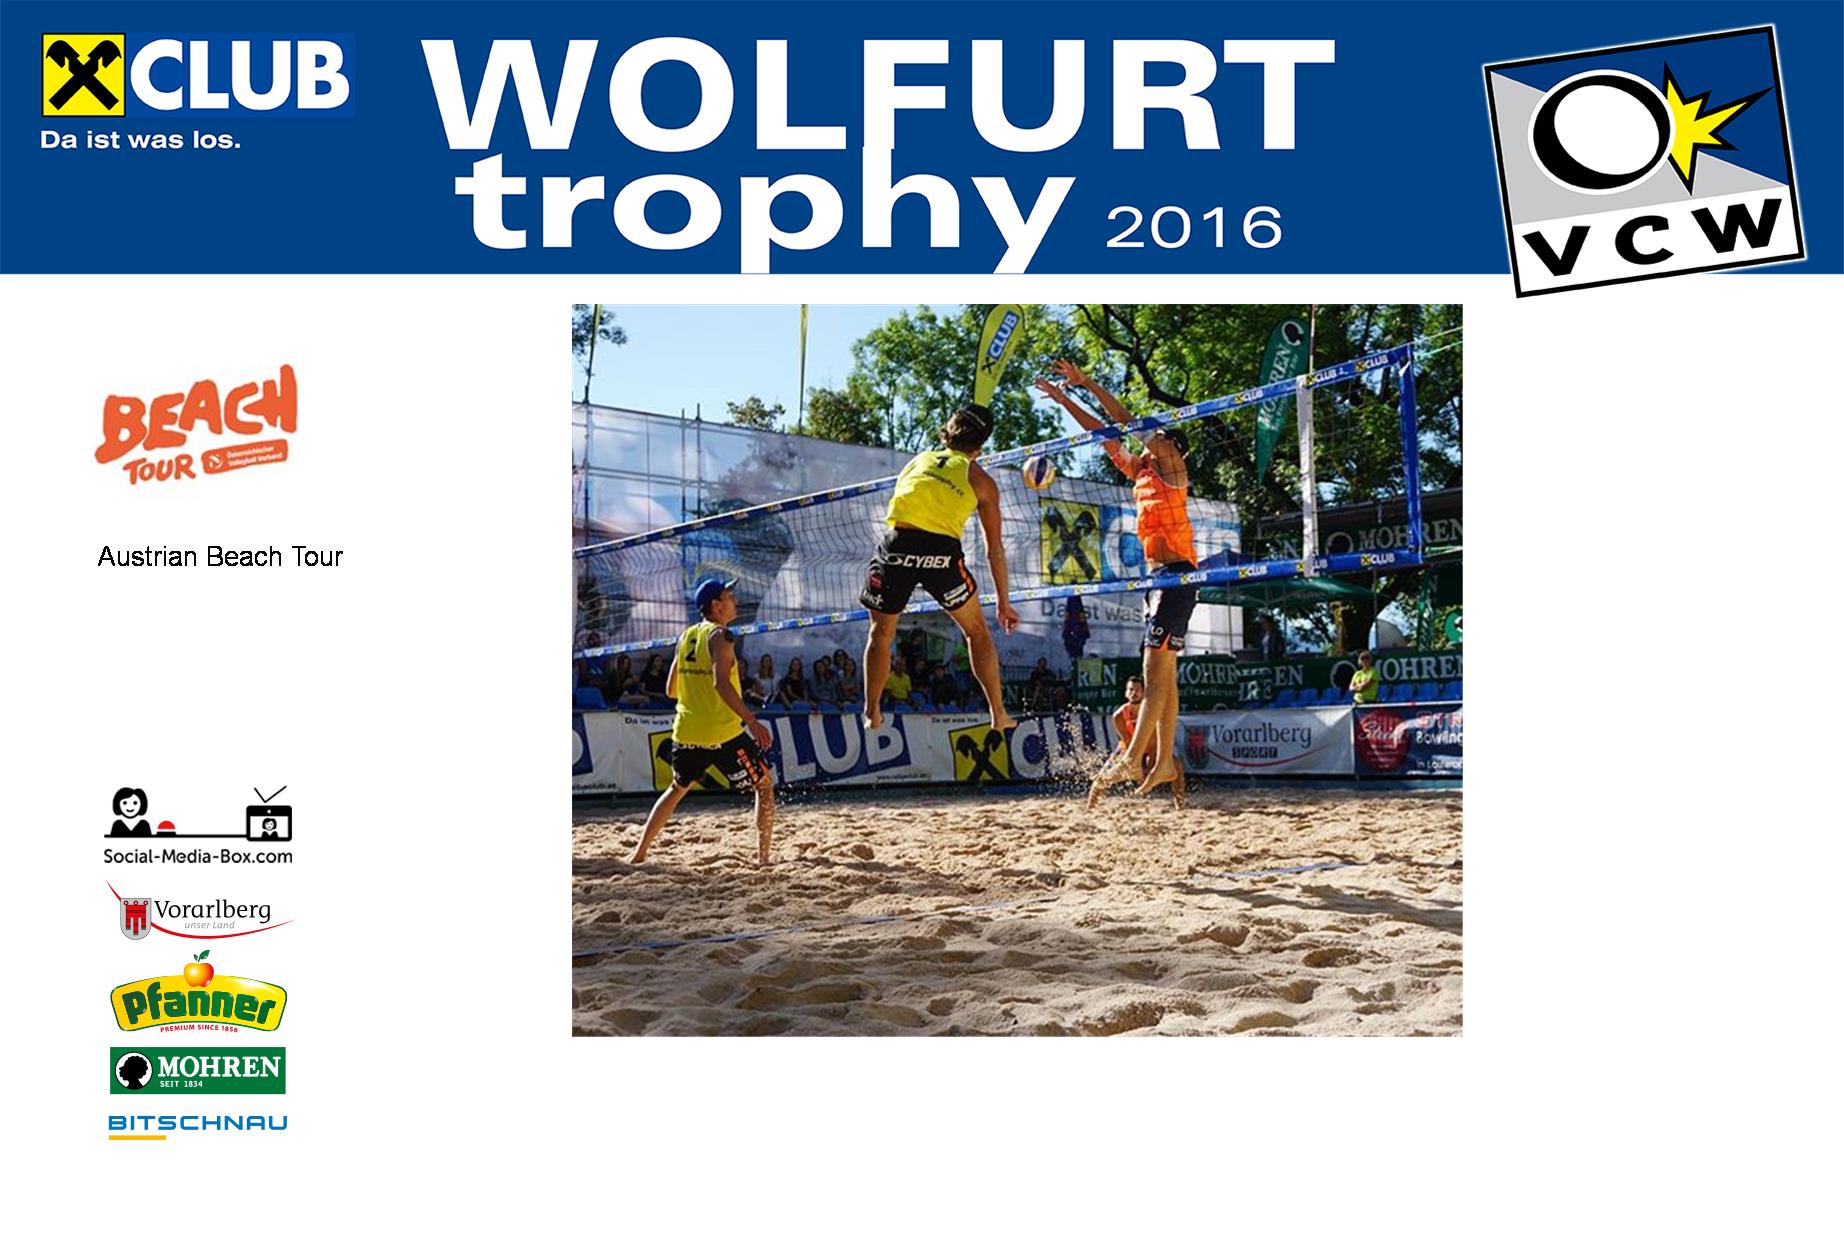 Wolfurt Trophy 2016